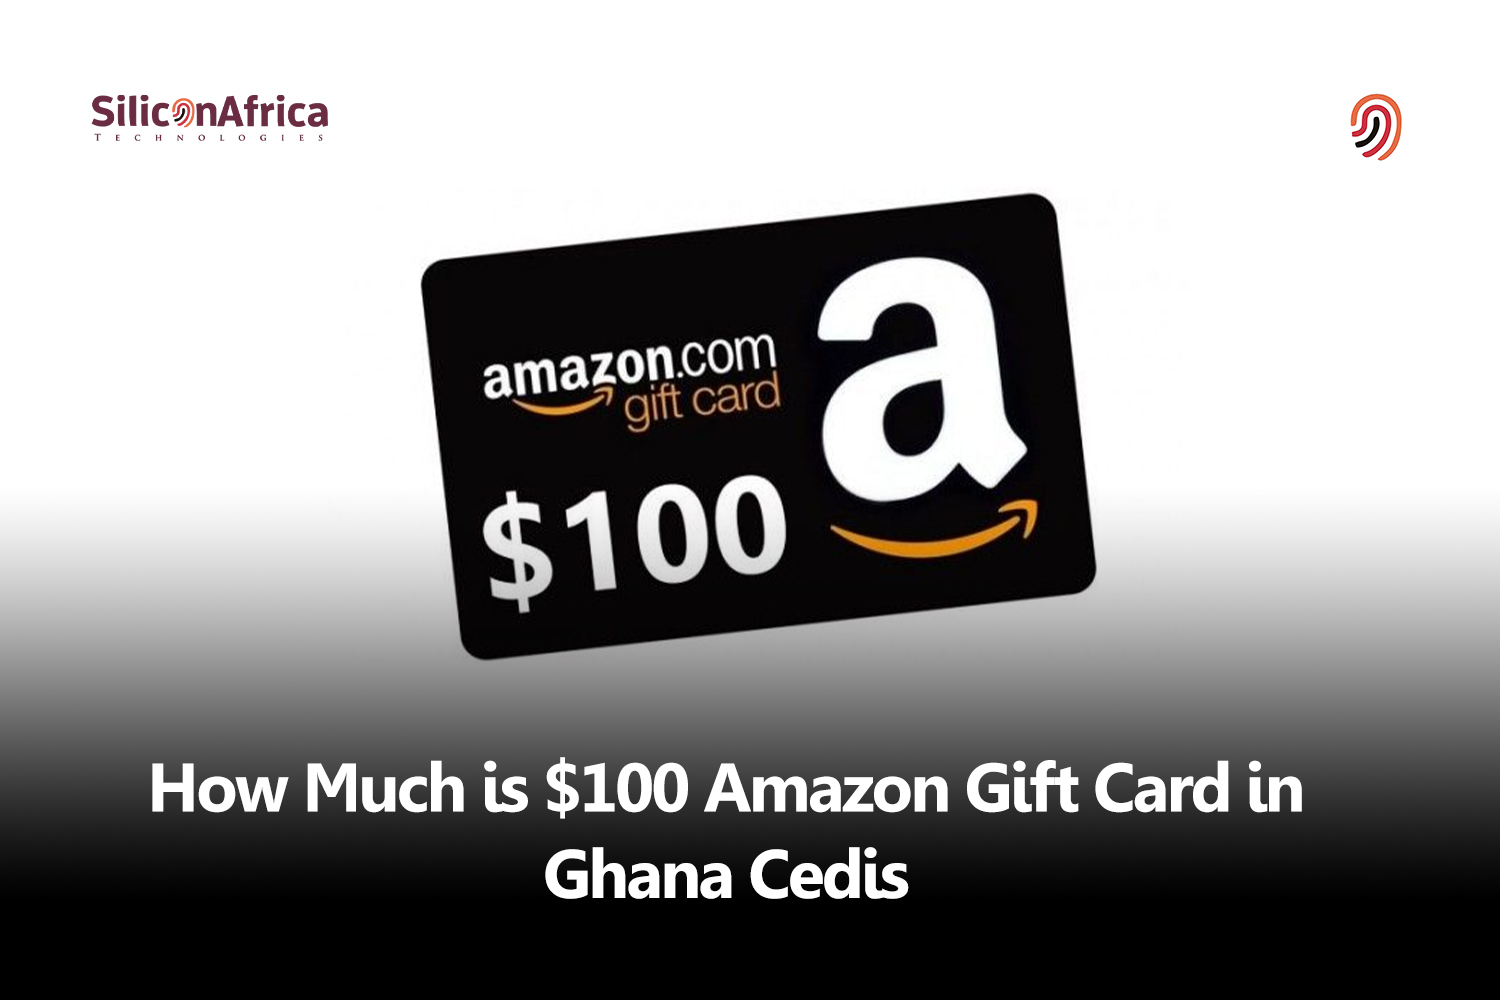 Amazon gift card in Ghana